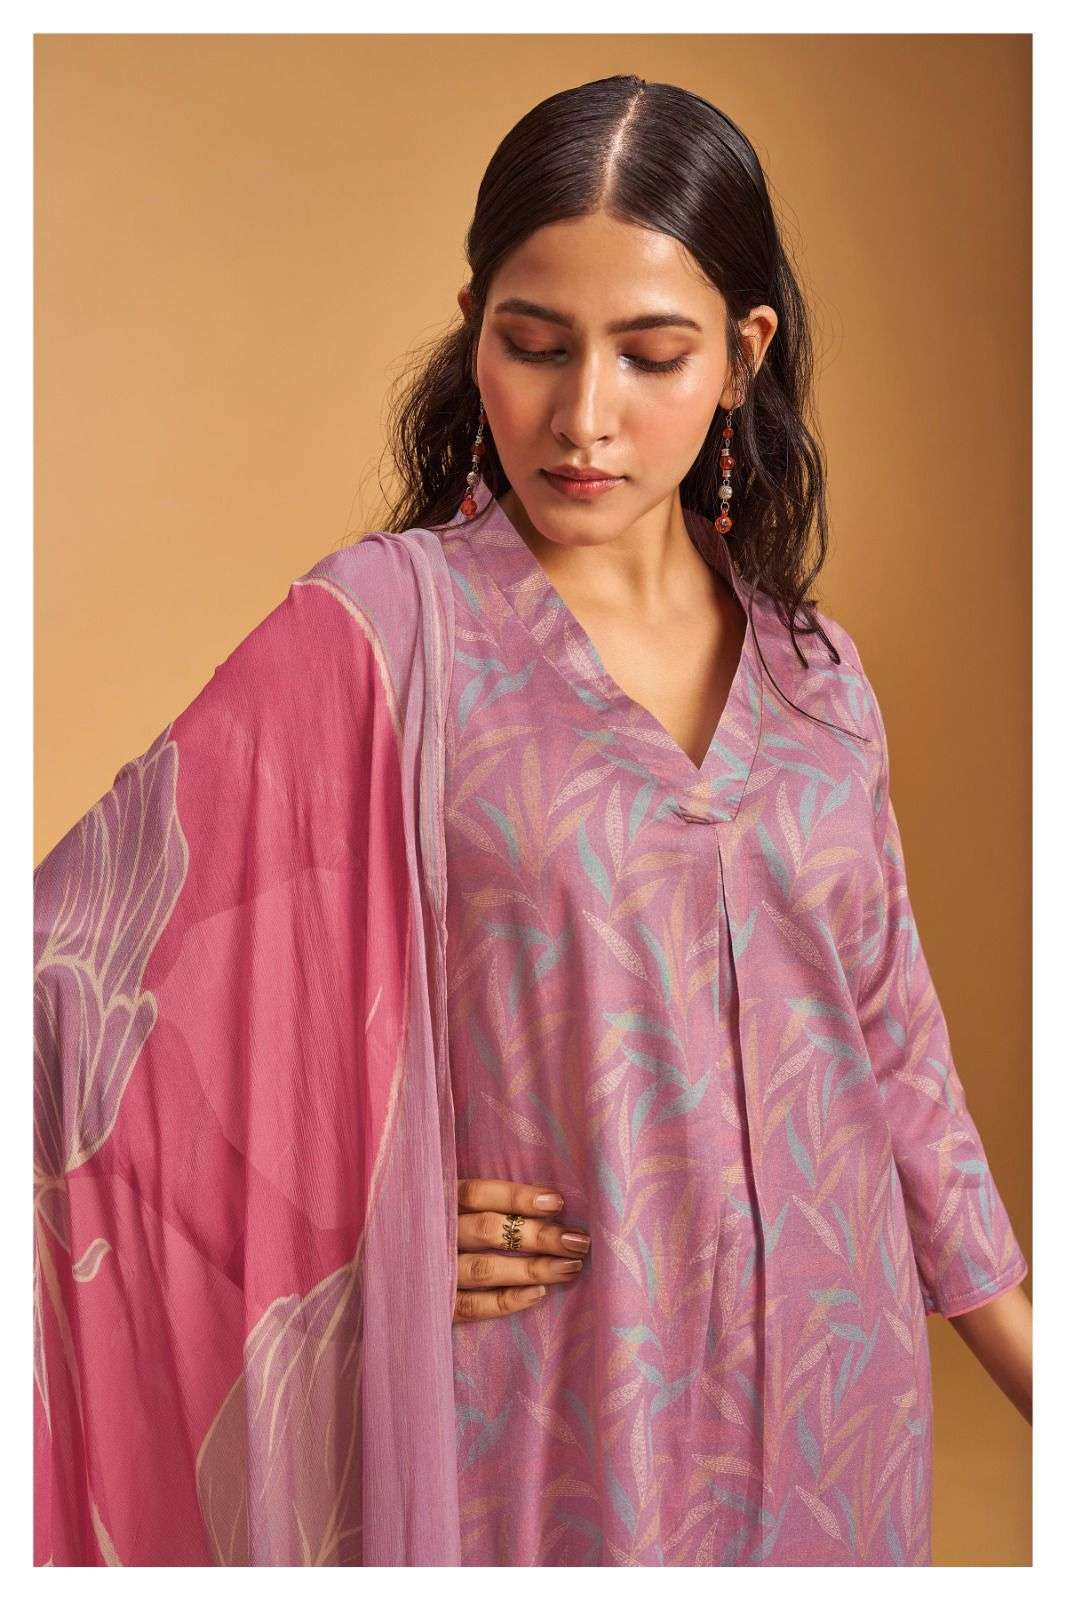 ganga vera 1867 colour series cotton silk exclusive party wear dress material catalogue 